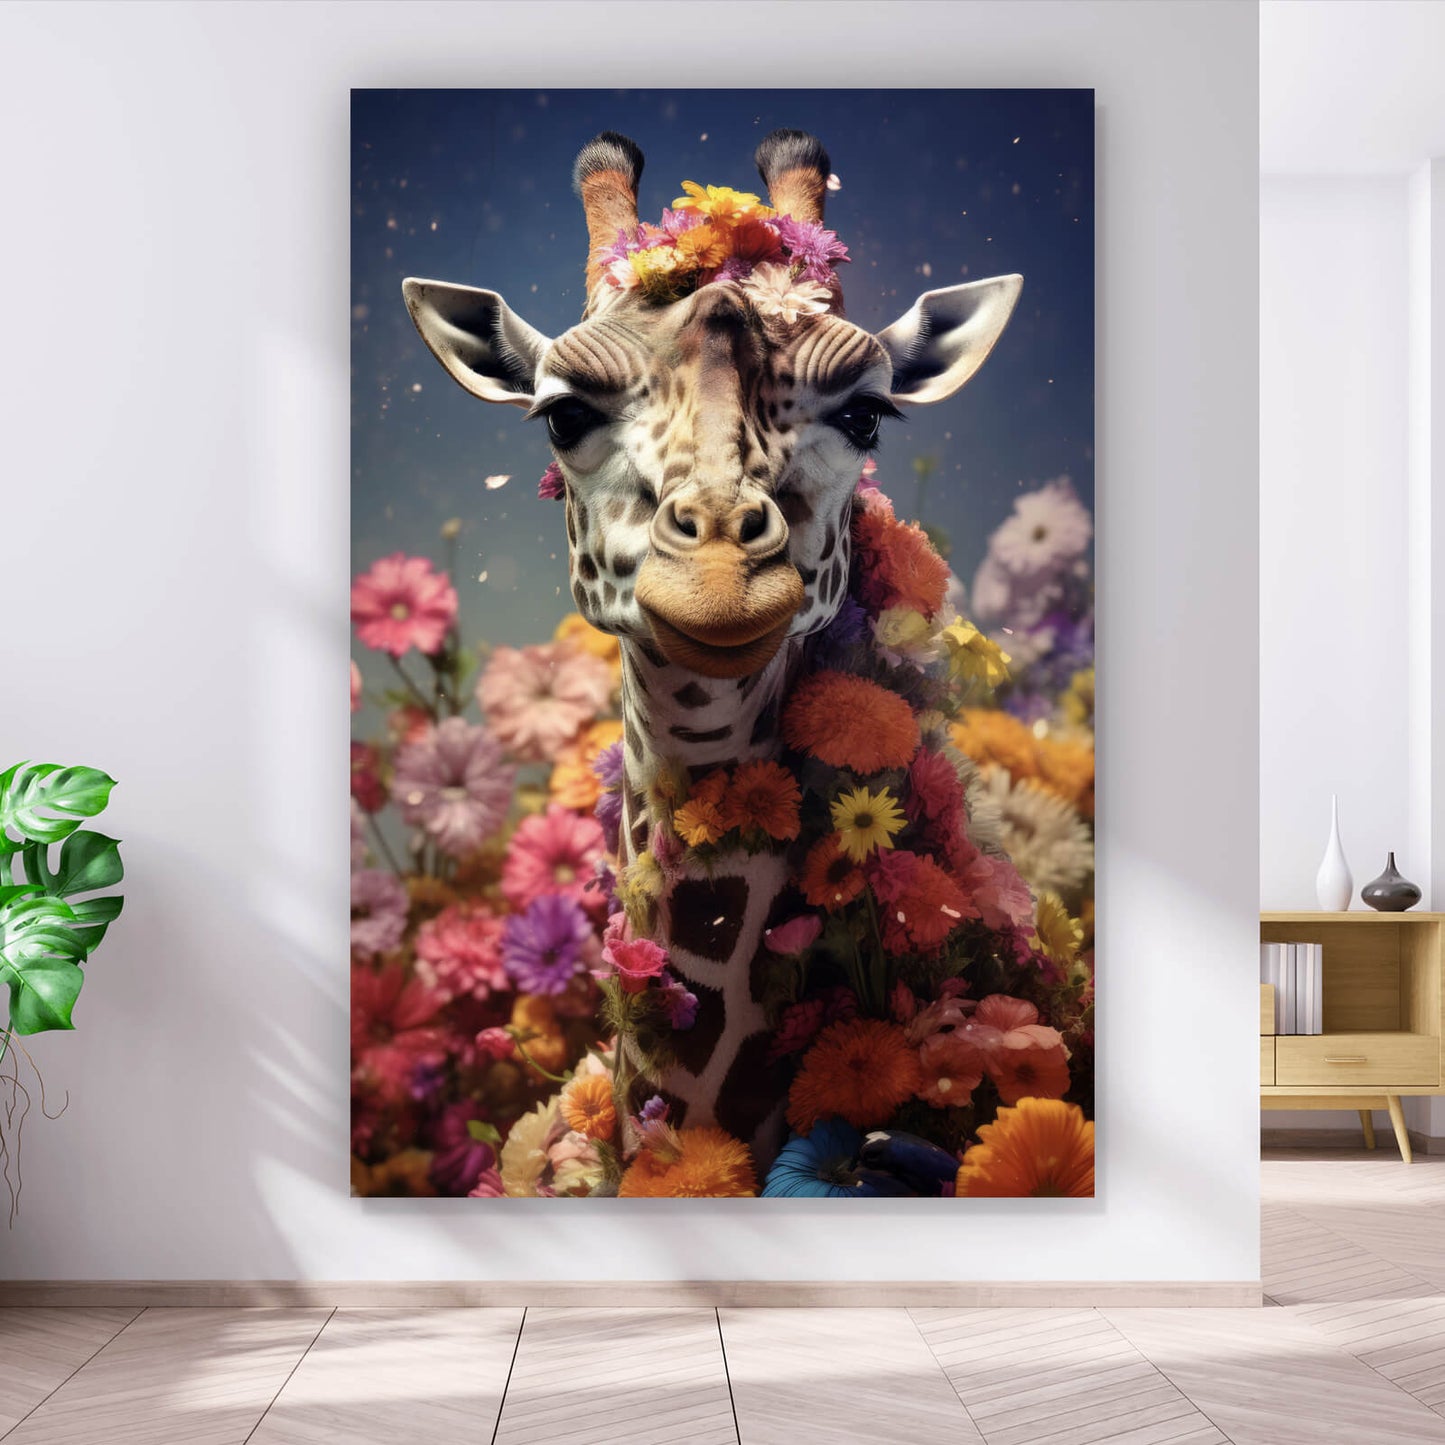 Leinwandbild Giraffe mit Blumen Digital Art Hochformat